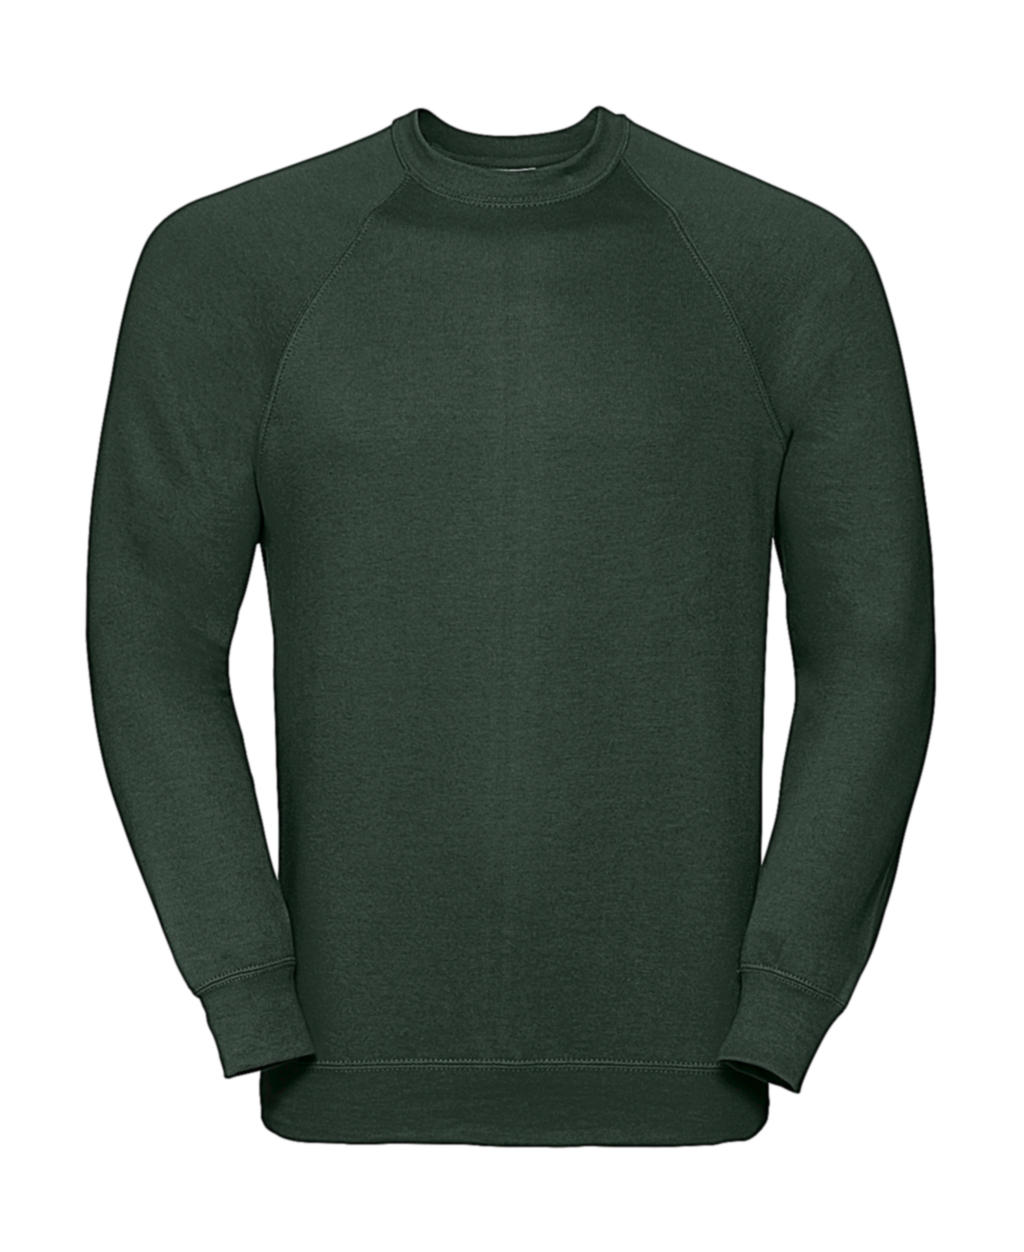  Classic Raglan Sweatshirt in Farbe Bottle Green